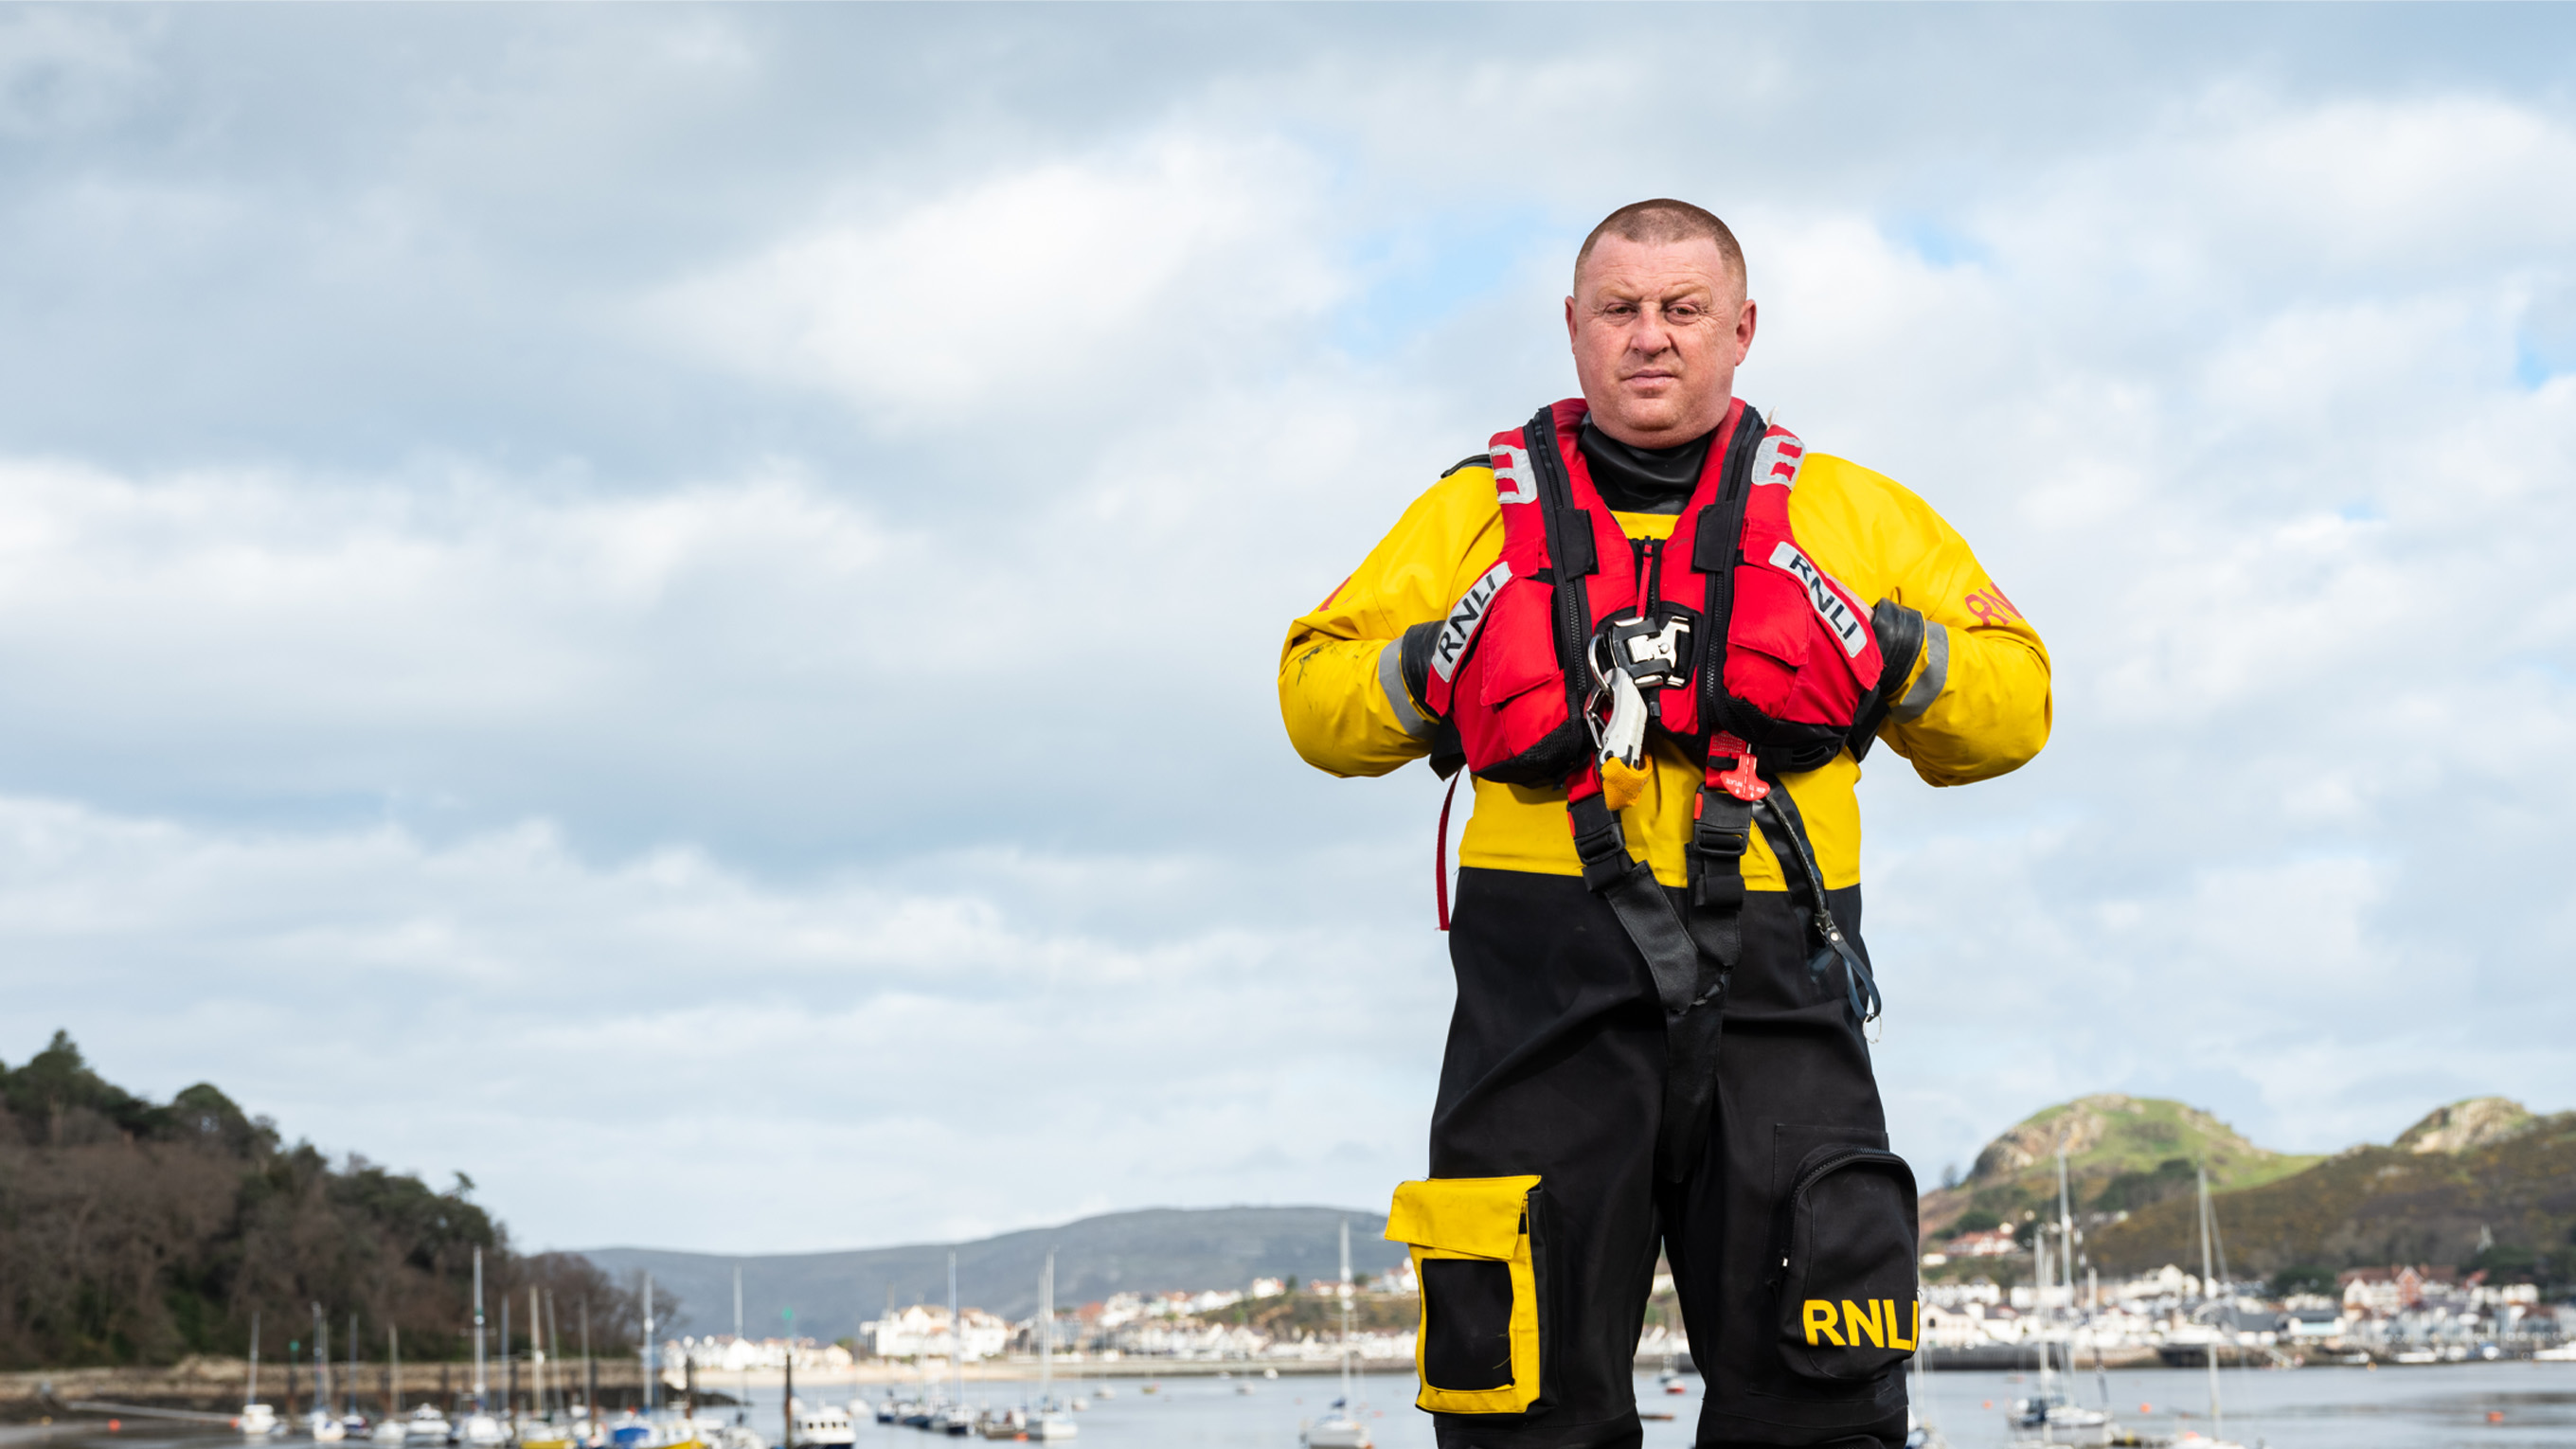 Lifeboat Crew Member Steve Tustin is standing in front of a blue roller door.